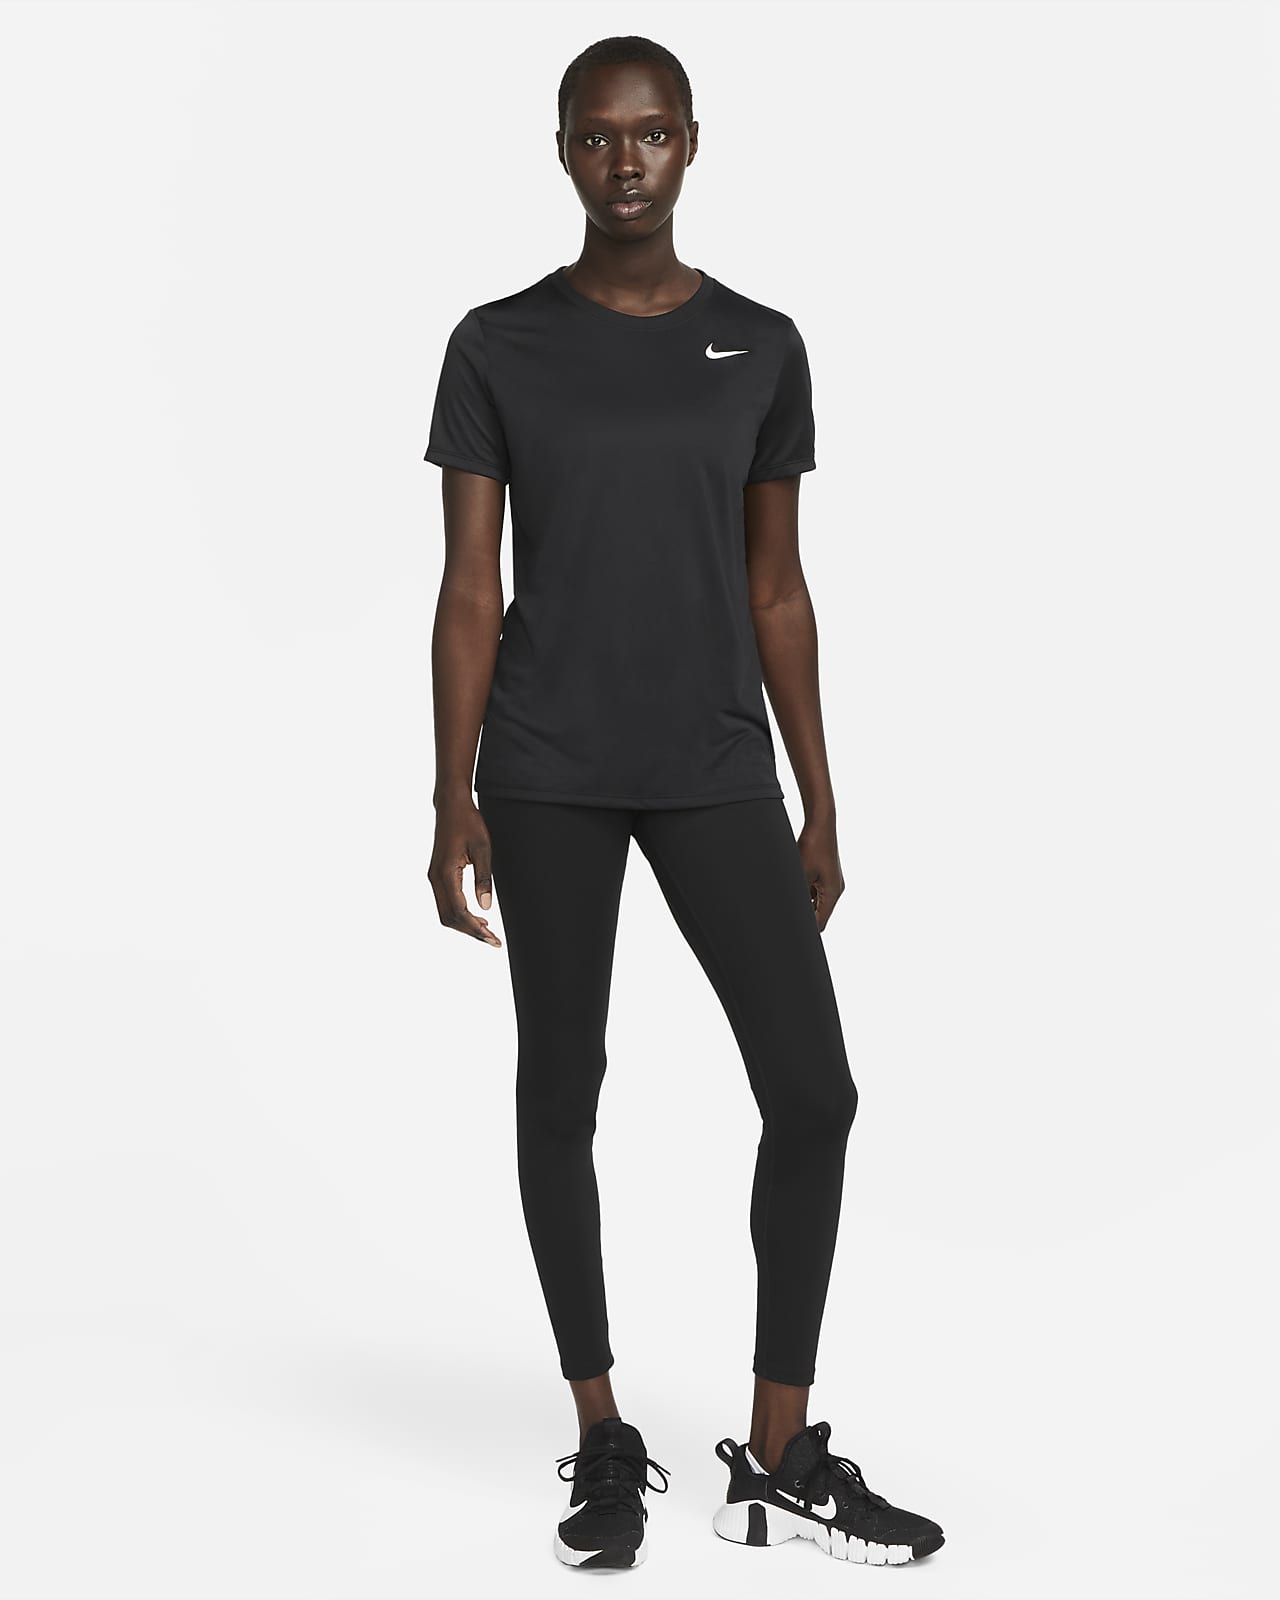 Nike Women Activewear Top Medium Black T-Shirt Logo Graphic Dri Fit Tee